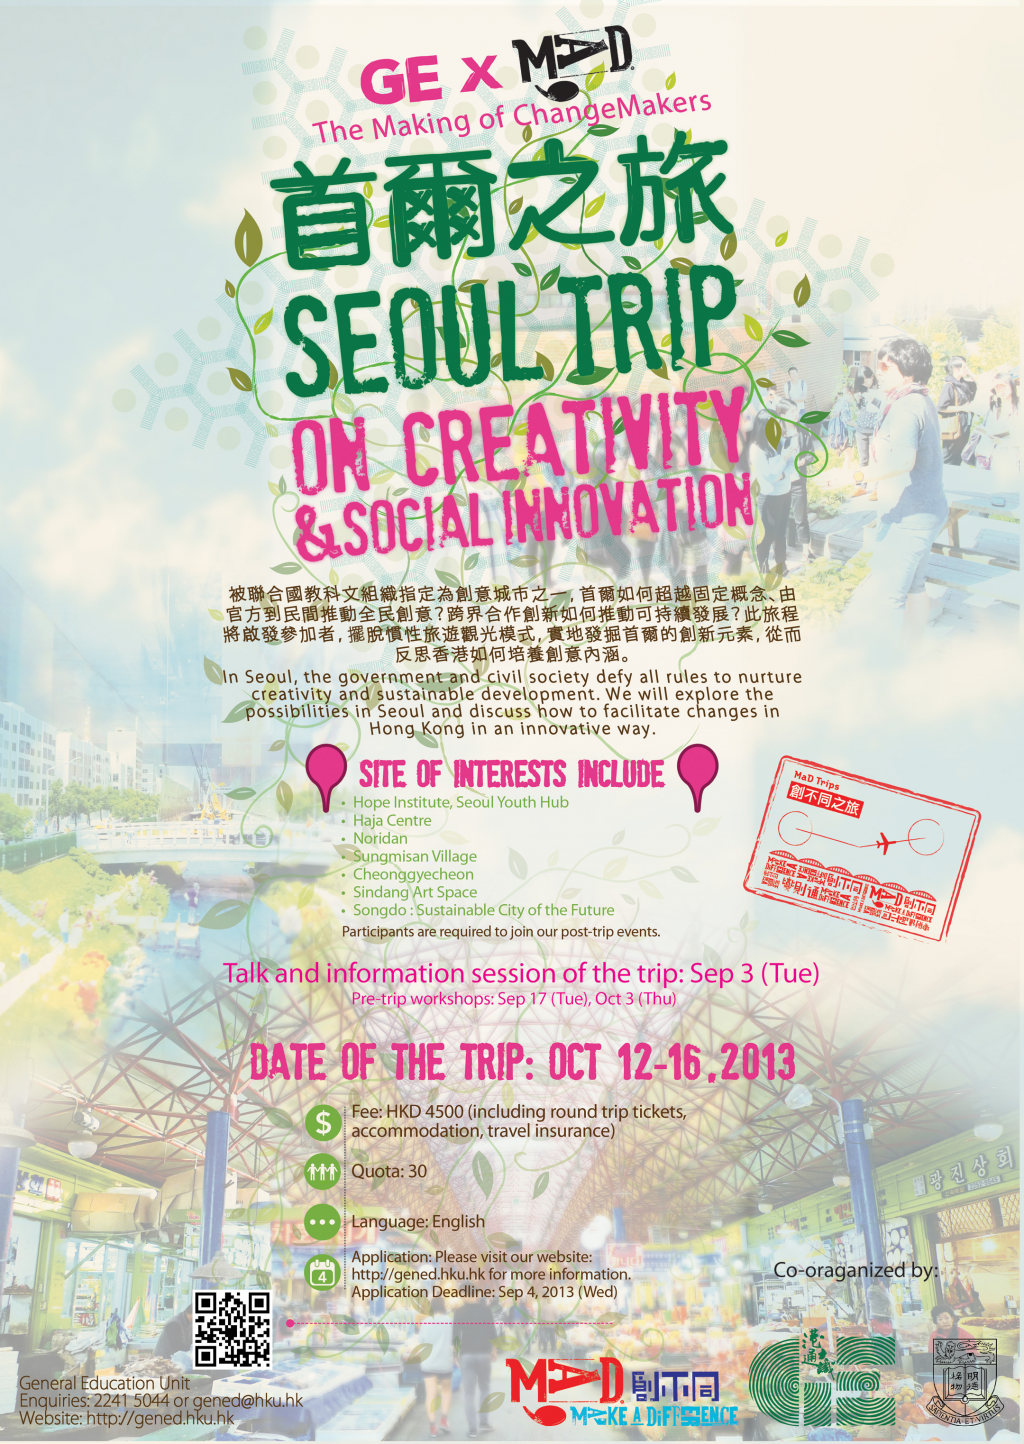 GE X MaD Seoul Trip on creativity and social innovation 